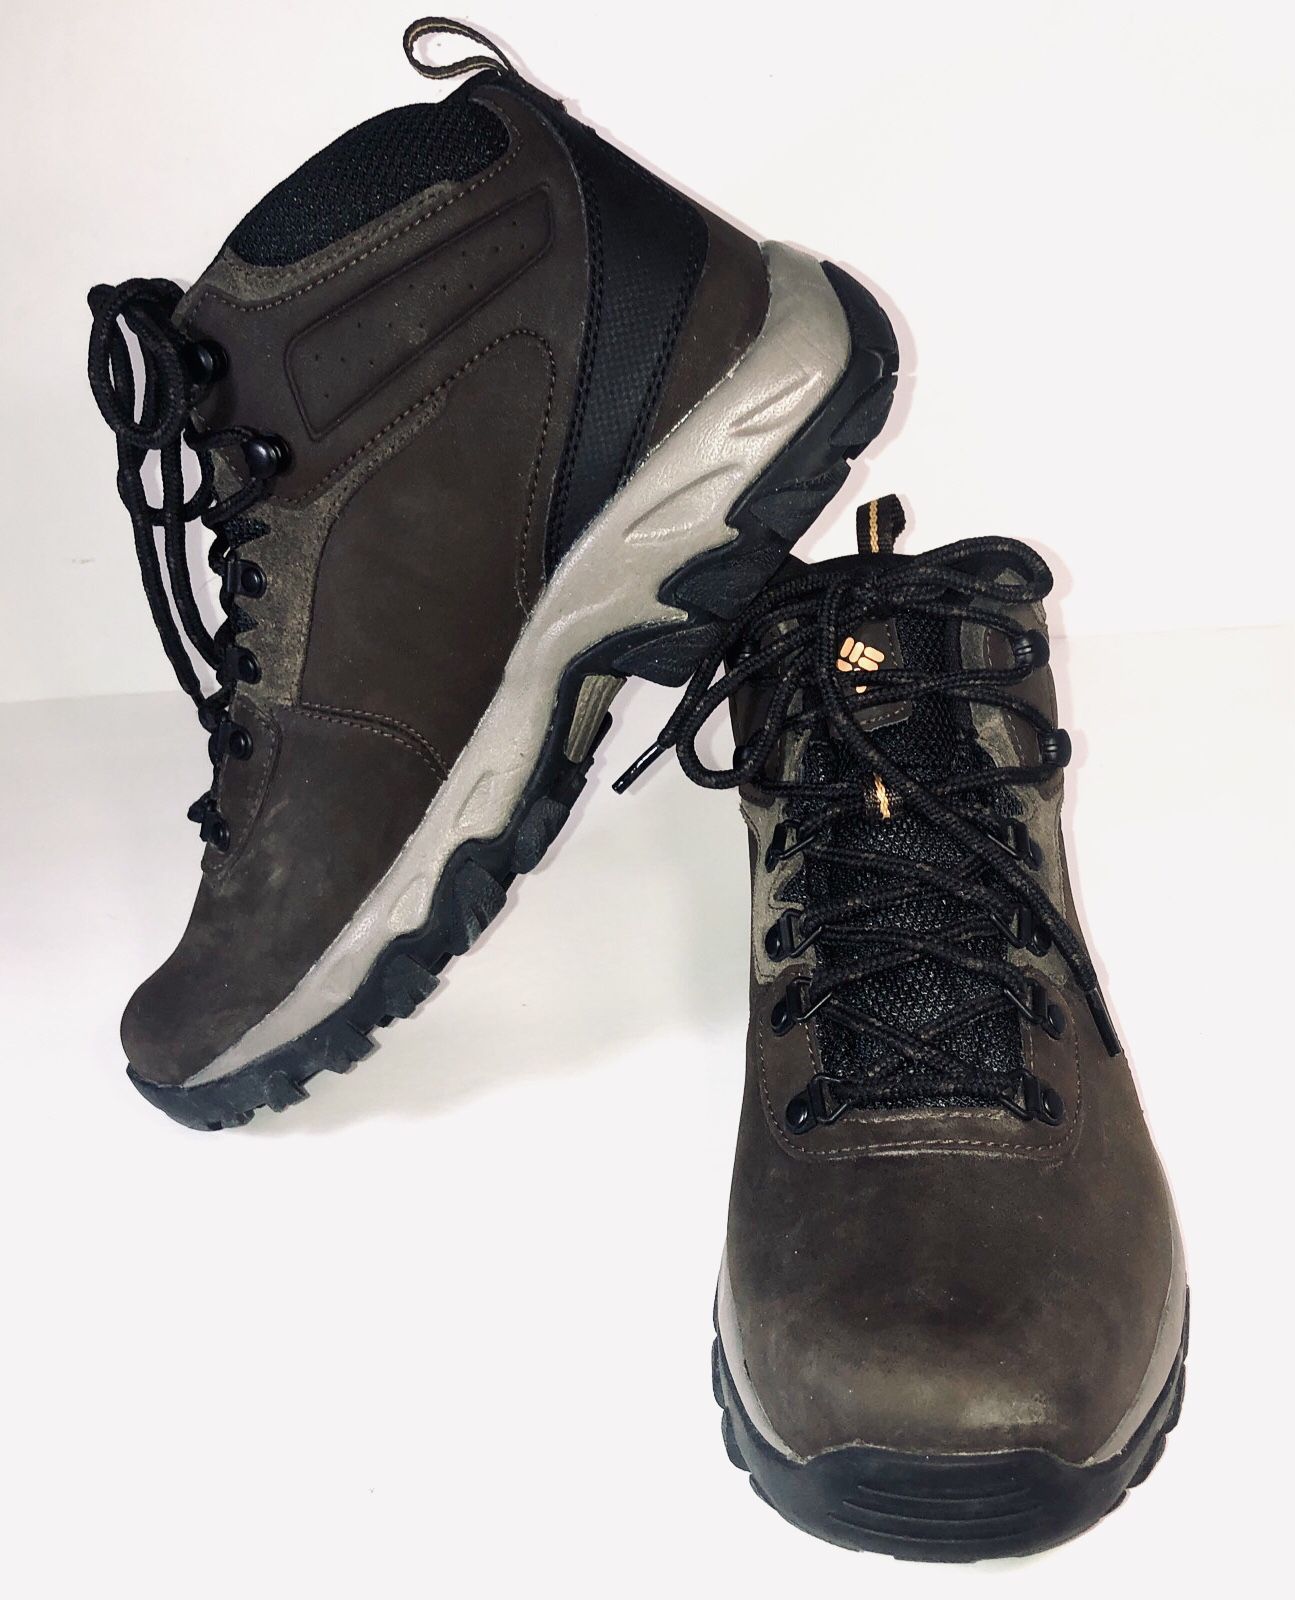 Columbia Newton Ridge Plus II, Men’s Waterproof Hiking Boots, Brown Size 9.5 Wide